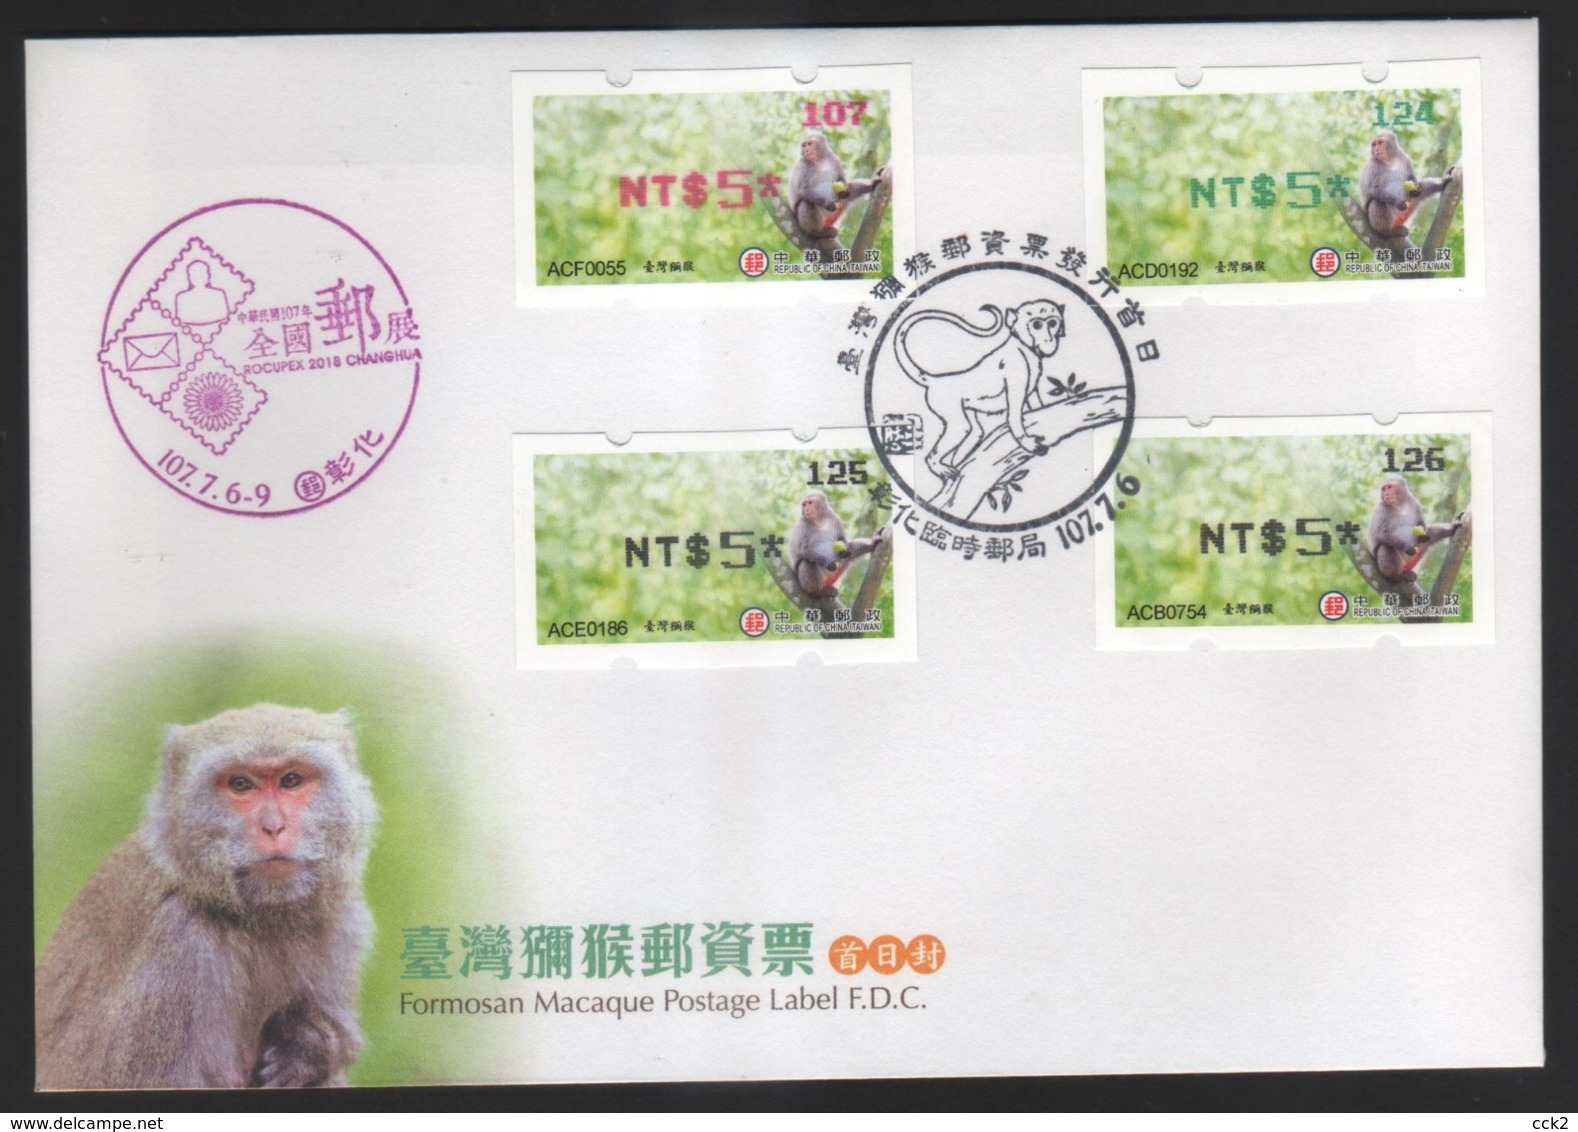 Taiwan R.O.CHINA - ATM Frama FDC -Formosan Macaque - Vignette [ATM]